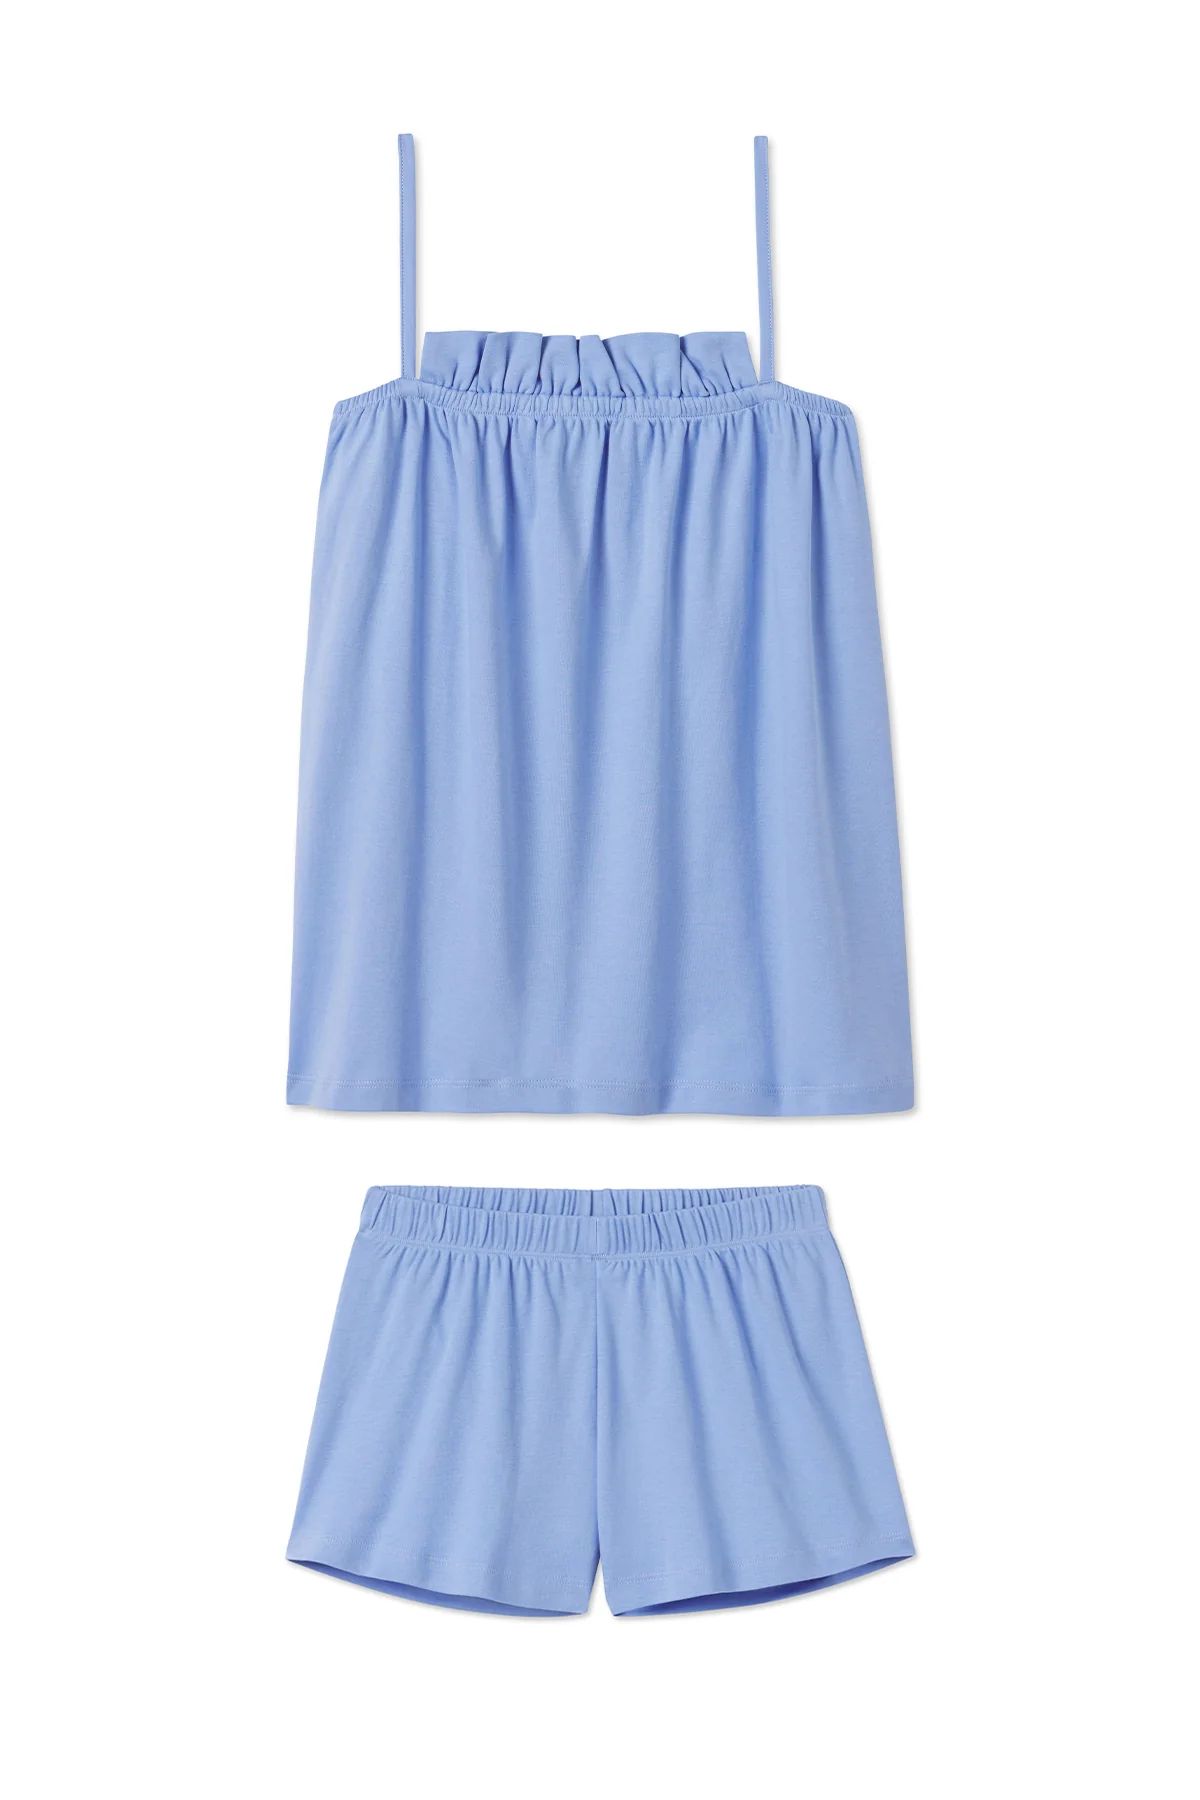 Pima Ruffle Shorts Set in Hydrangea | Lake Pajamas